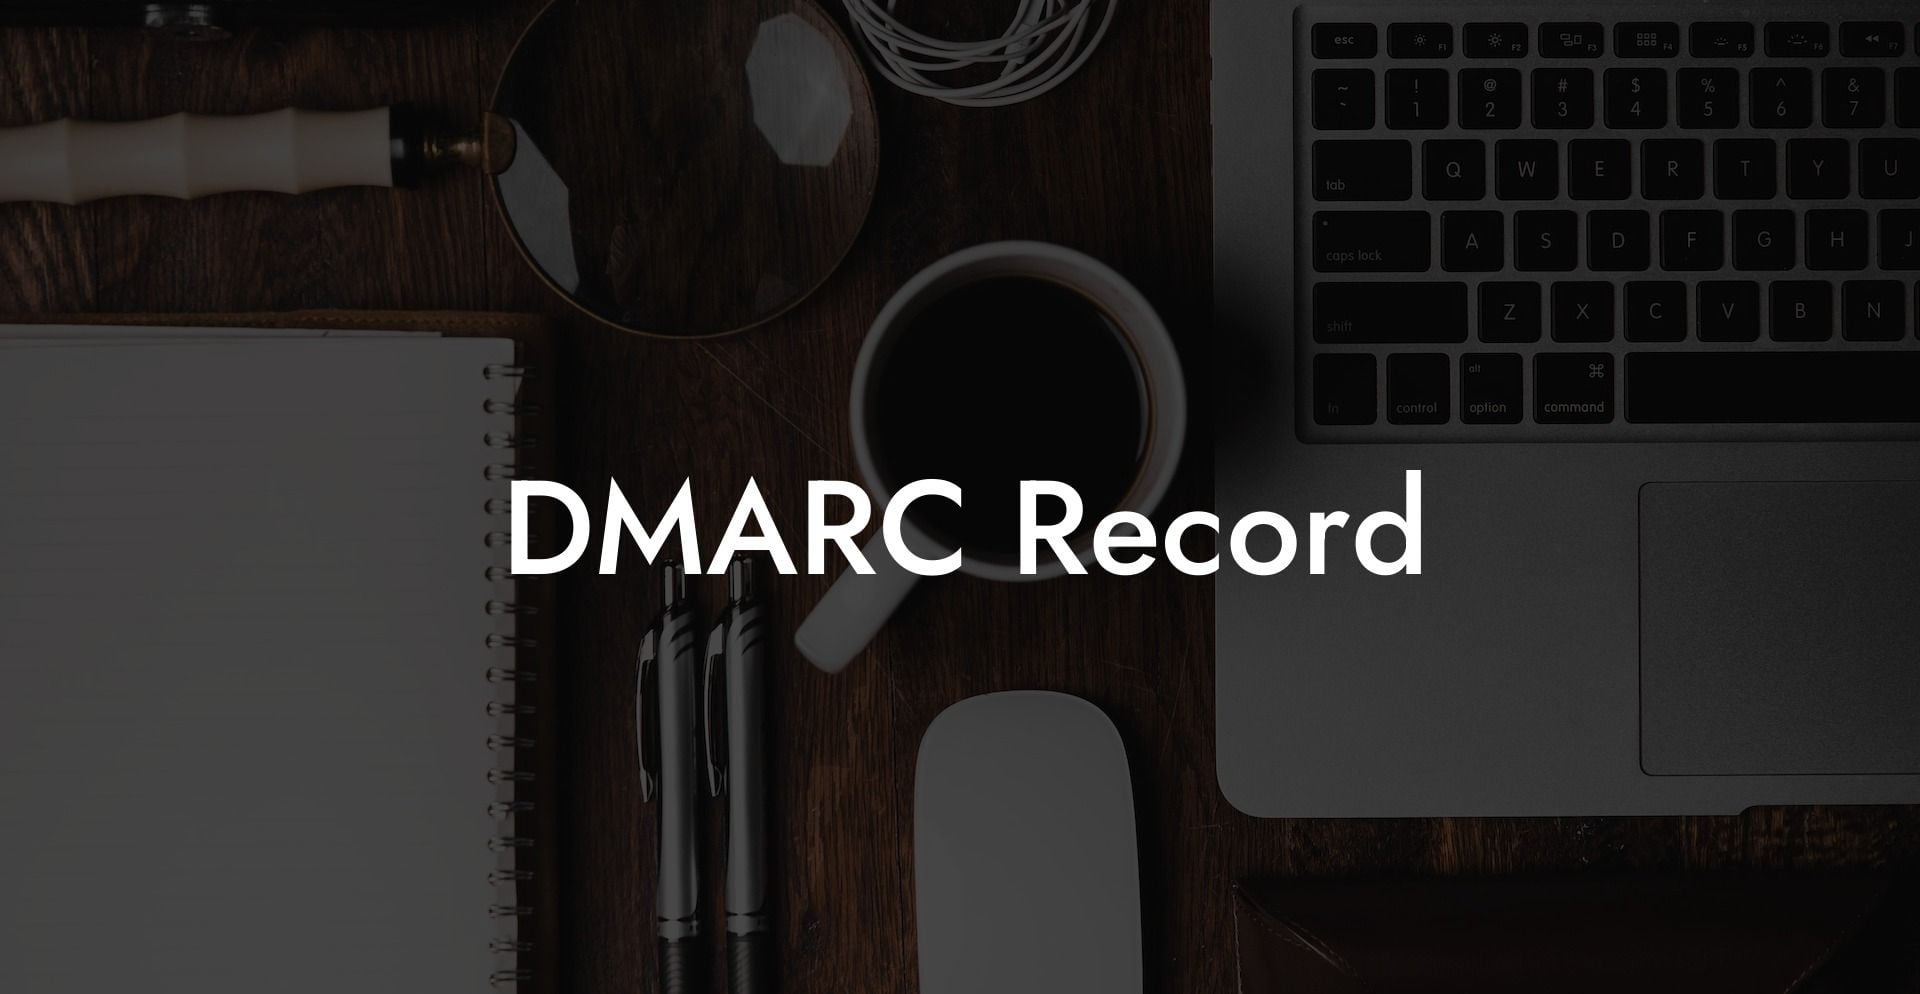 DMARC Record